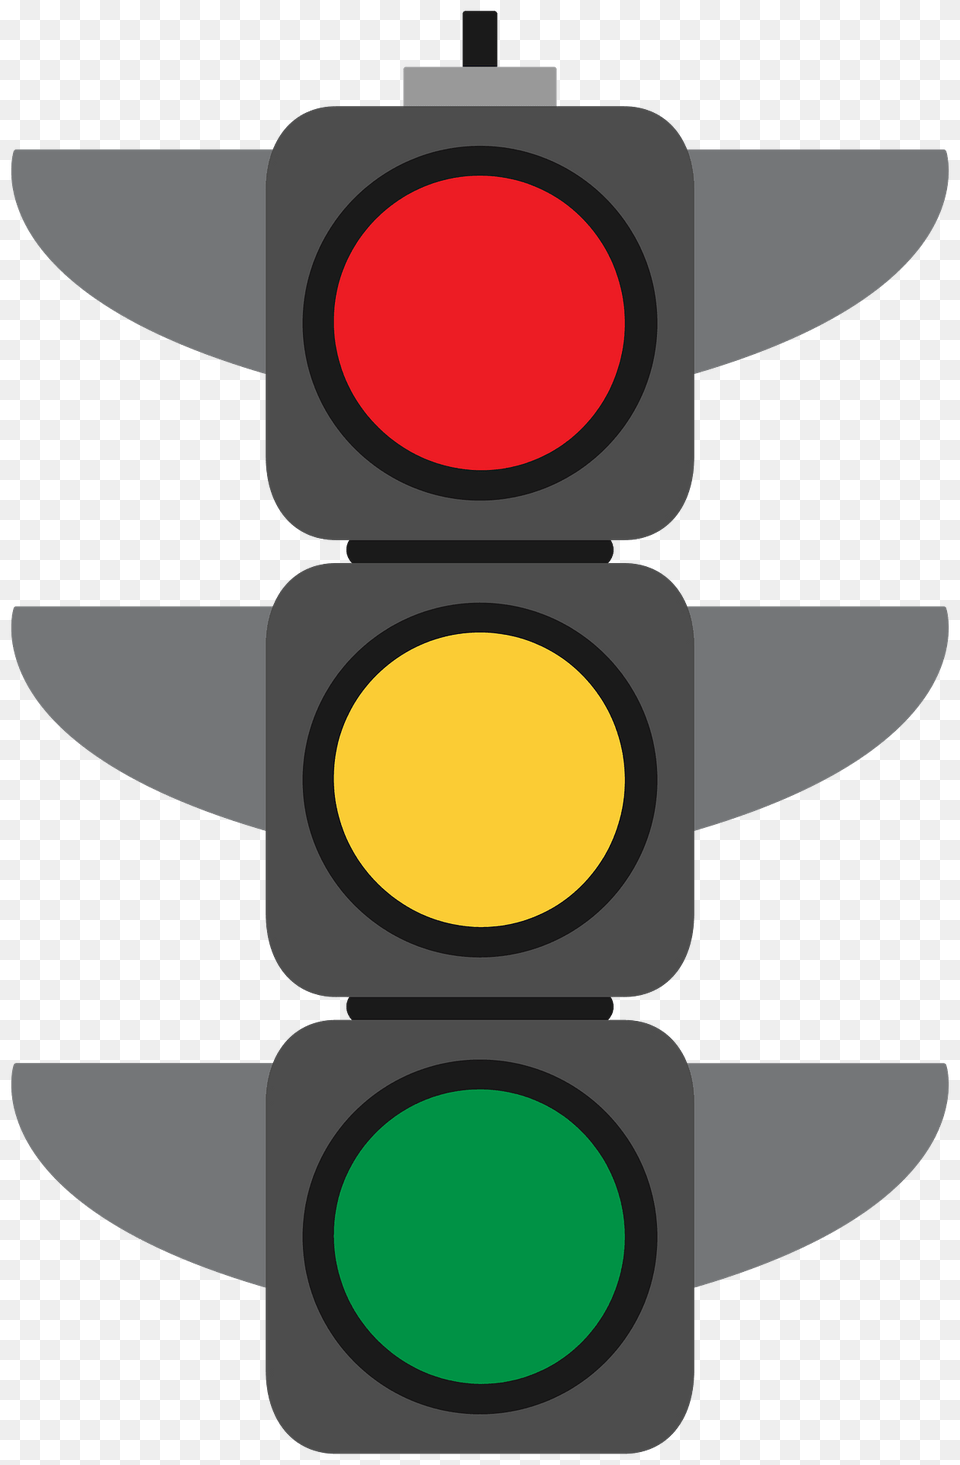 Traffic Light Clipart, Traffic Light Png Image